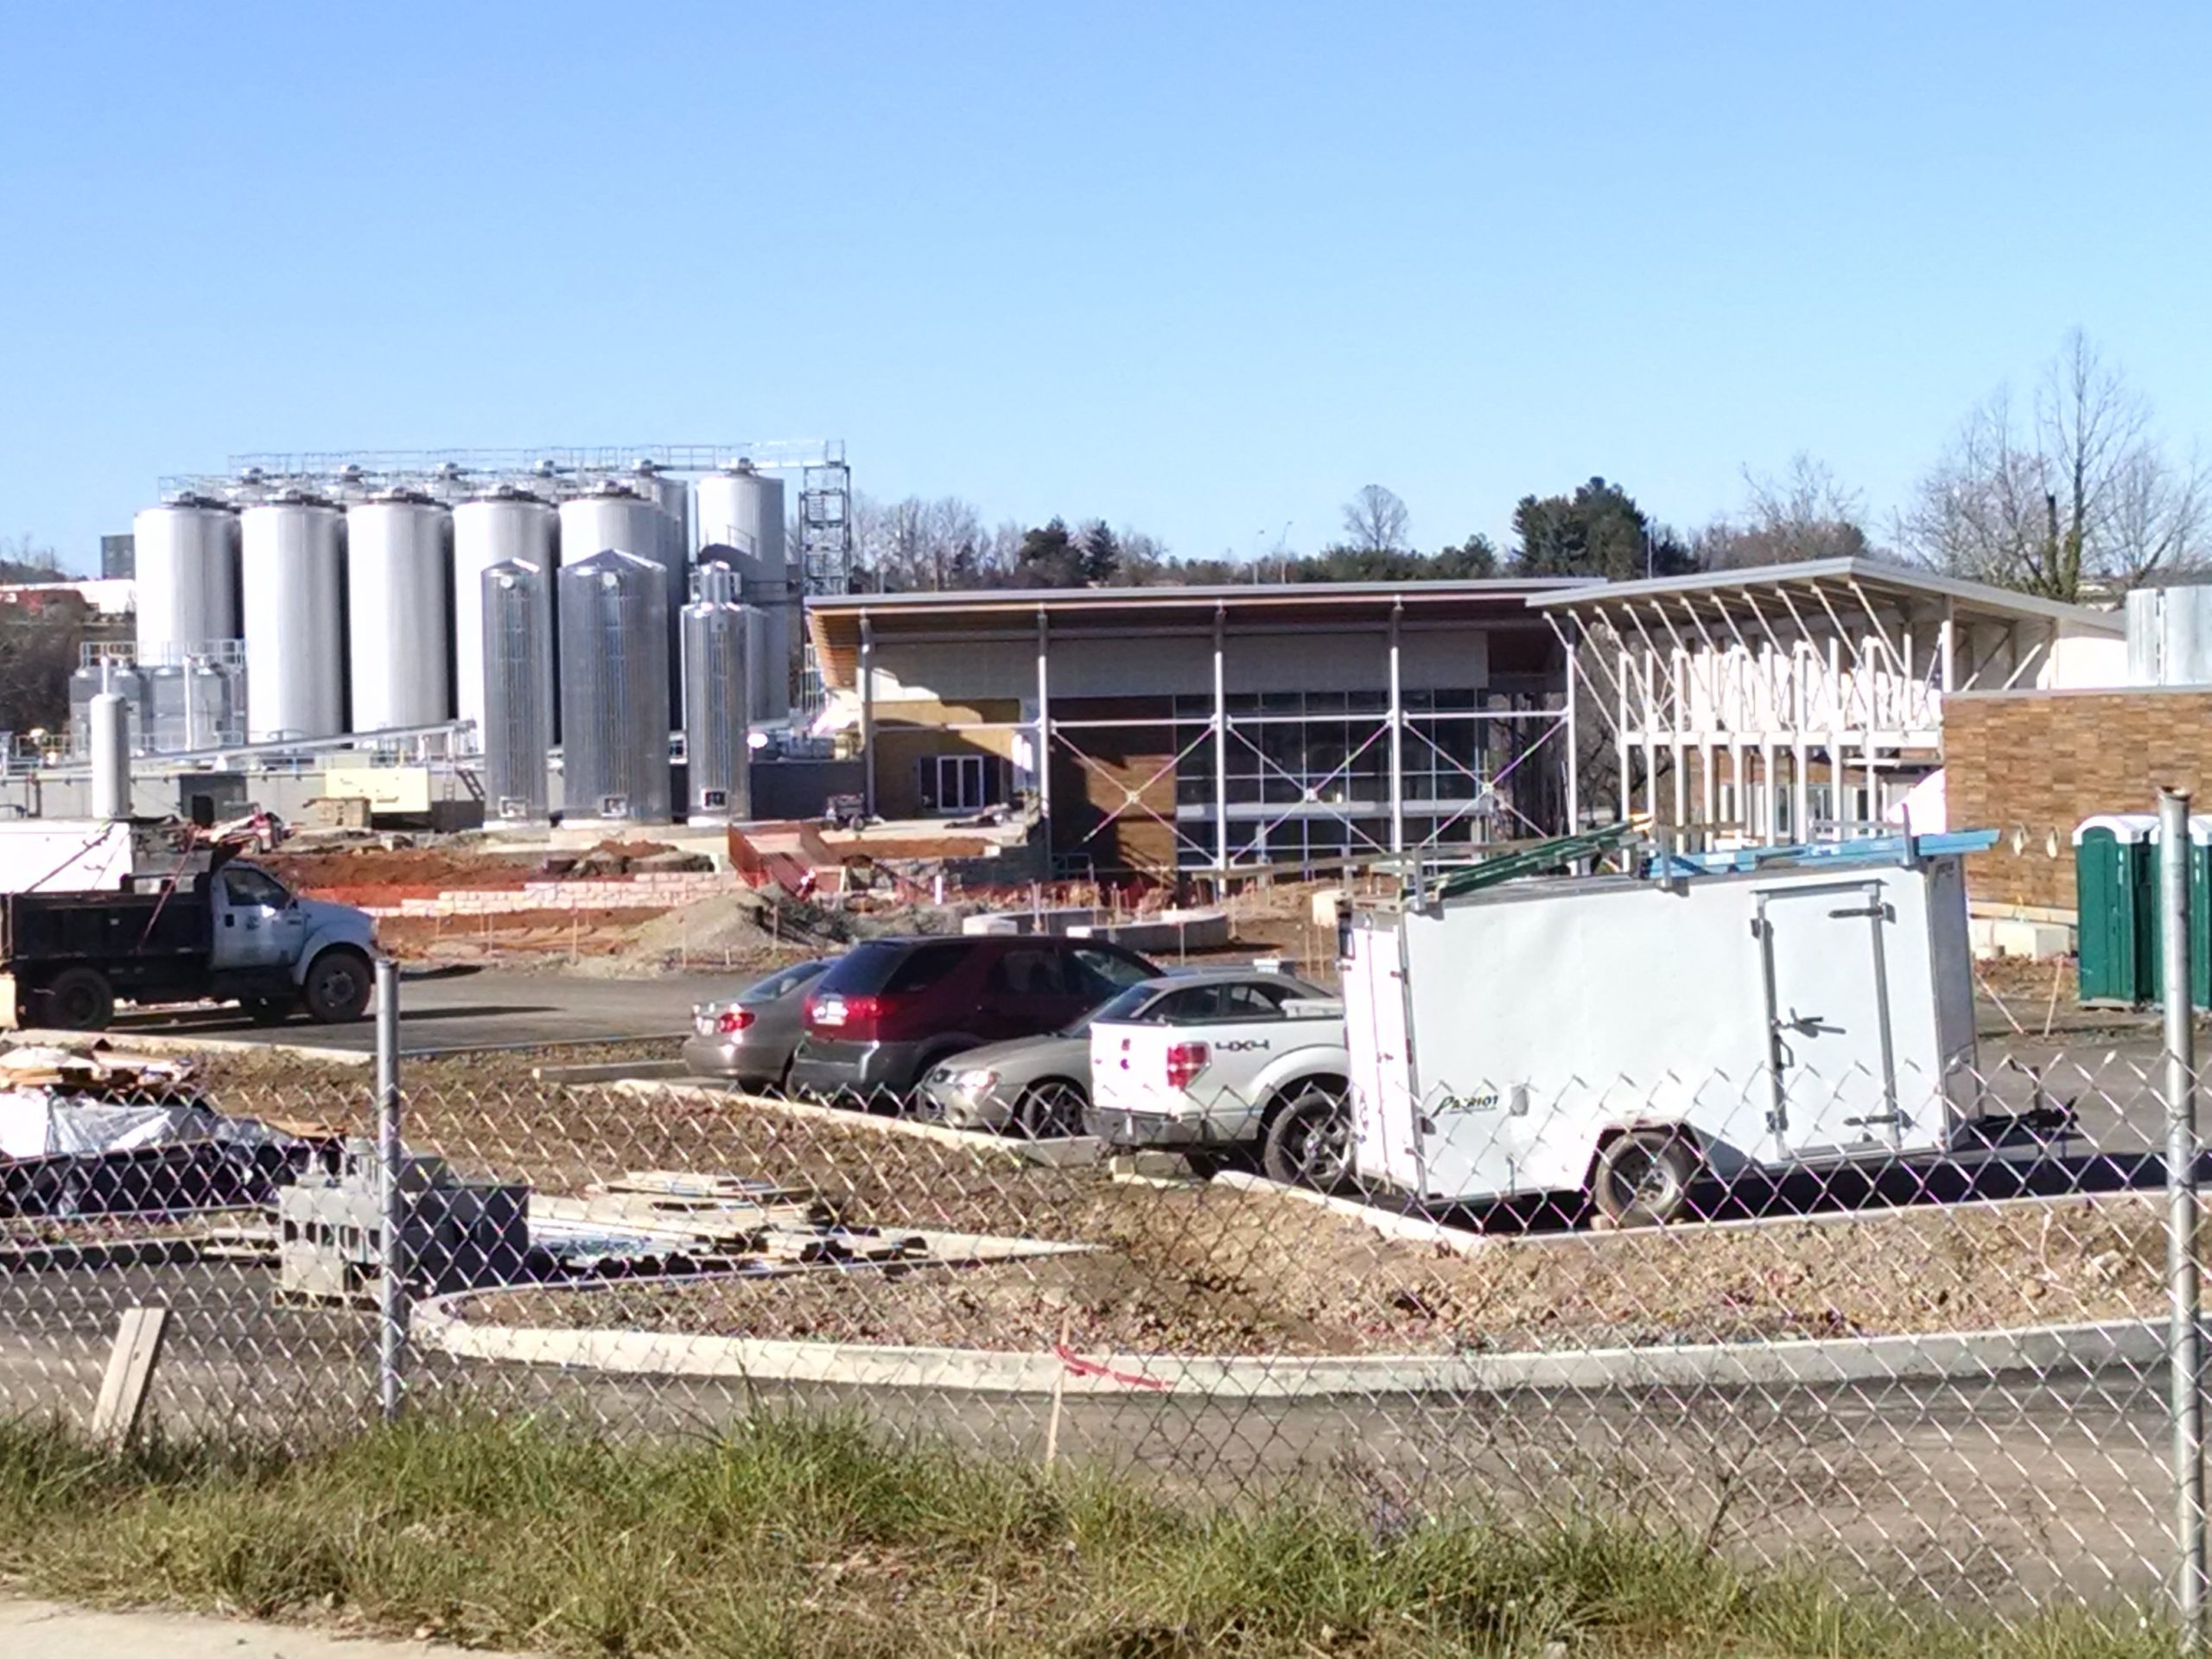 New Belgium Brewing in Asheville, NC still under construction.